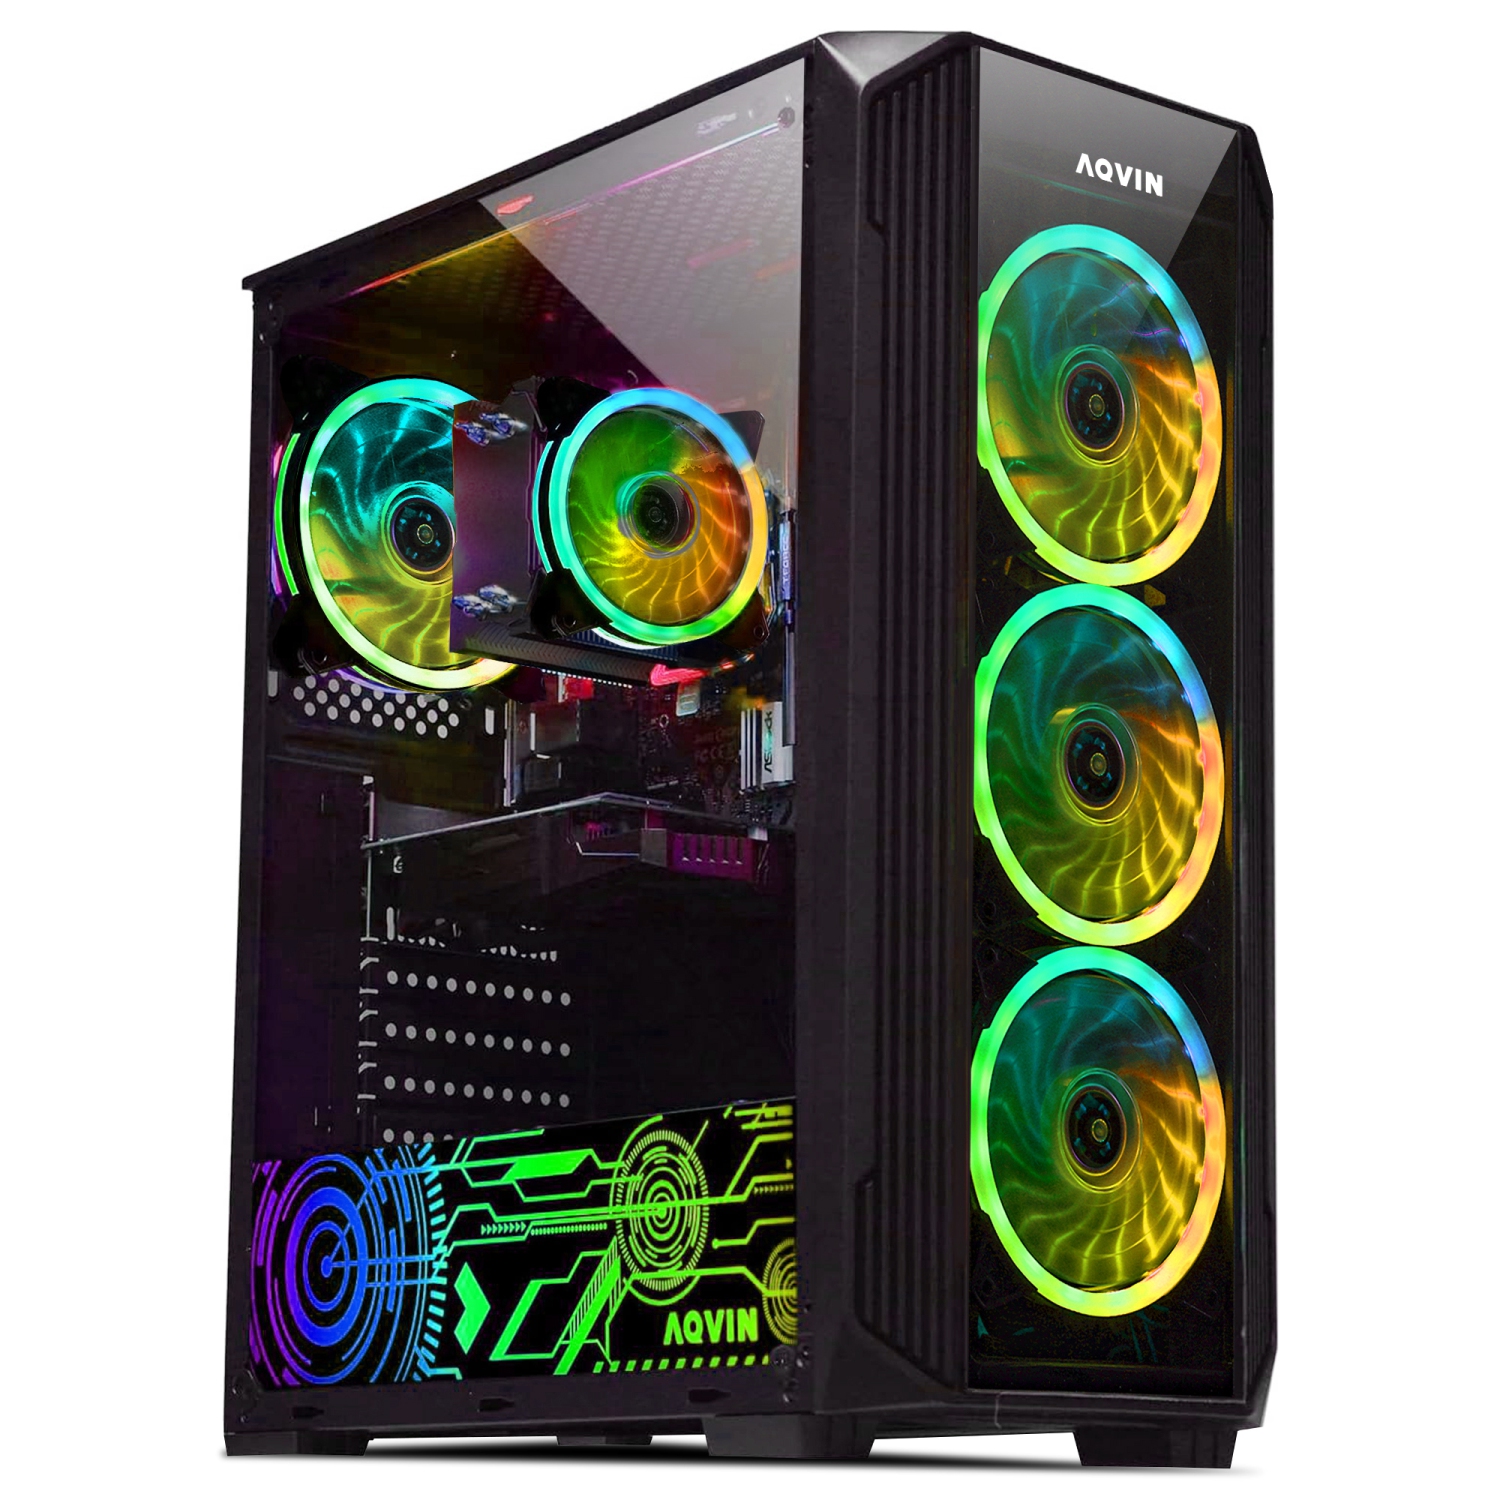 Gaming PC AQVIN ZForce Desktop Computer - Black (Intel Hexa-Core i7 Processor/ GeForce RTX 3070 8GB GDDR6/ 2TB SSD/ 32GB DDR4 RAM/ Windows 11 Pro/ WIFI Ready) - Only at Best Buy